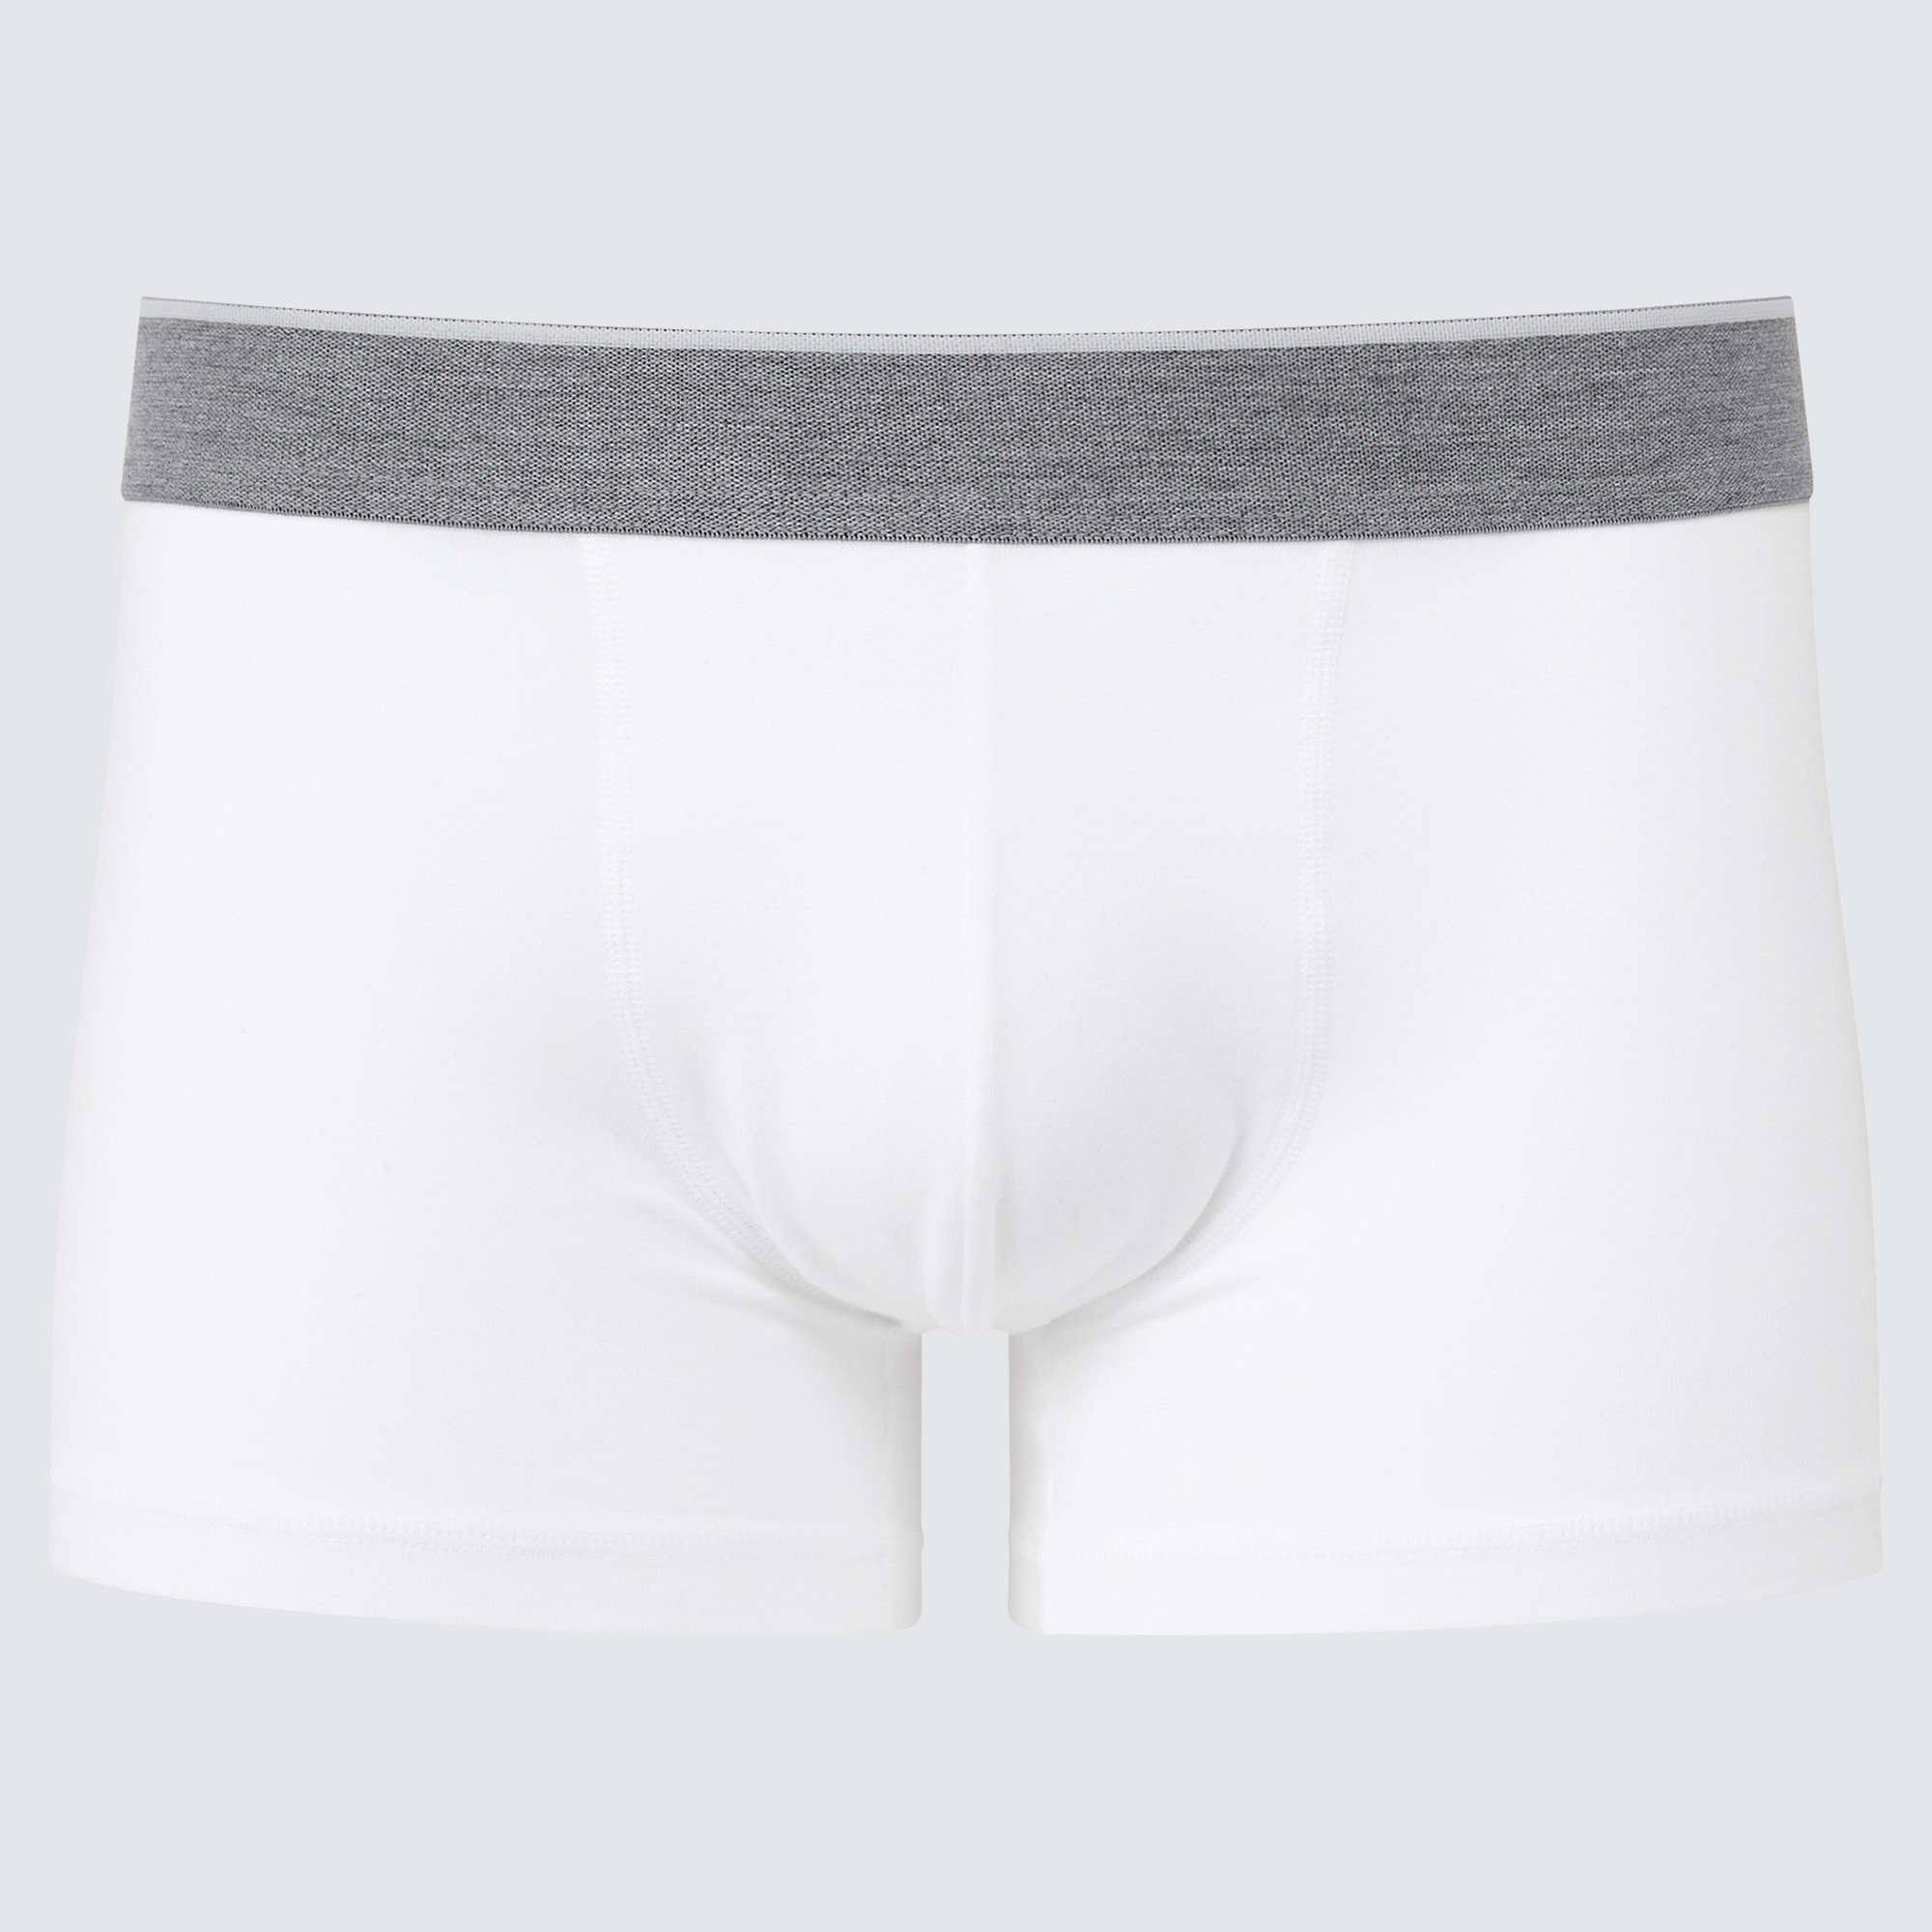 Supima cotton boxer shorts, GutteridgeUS